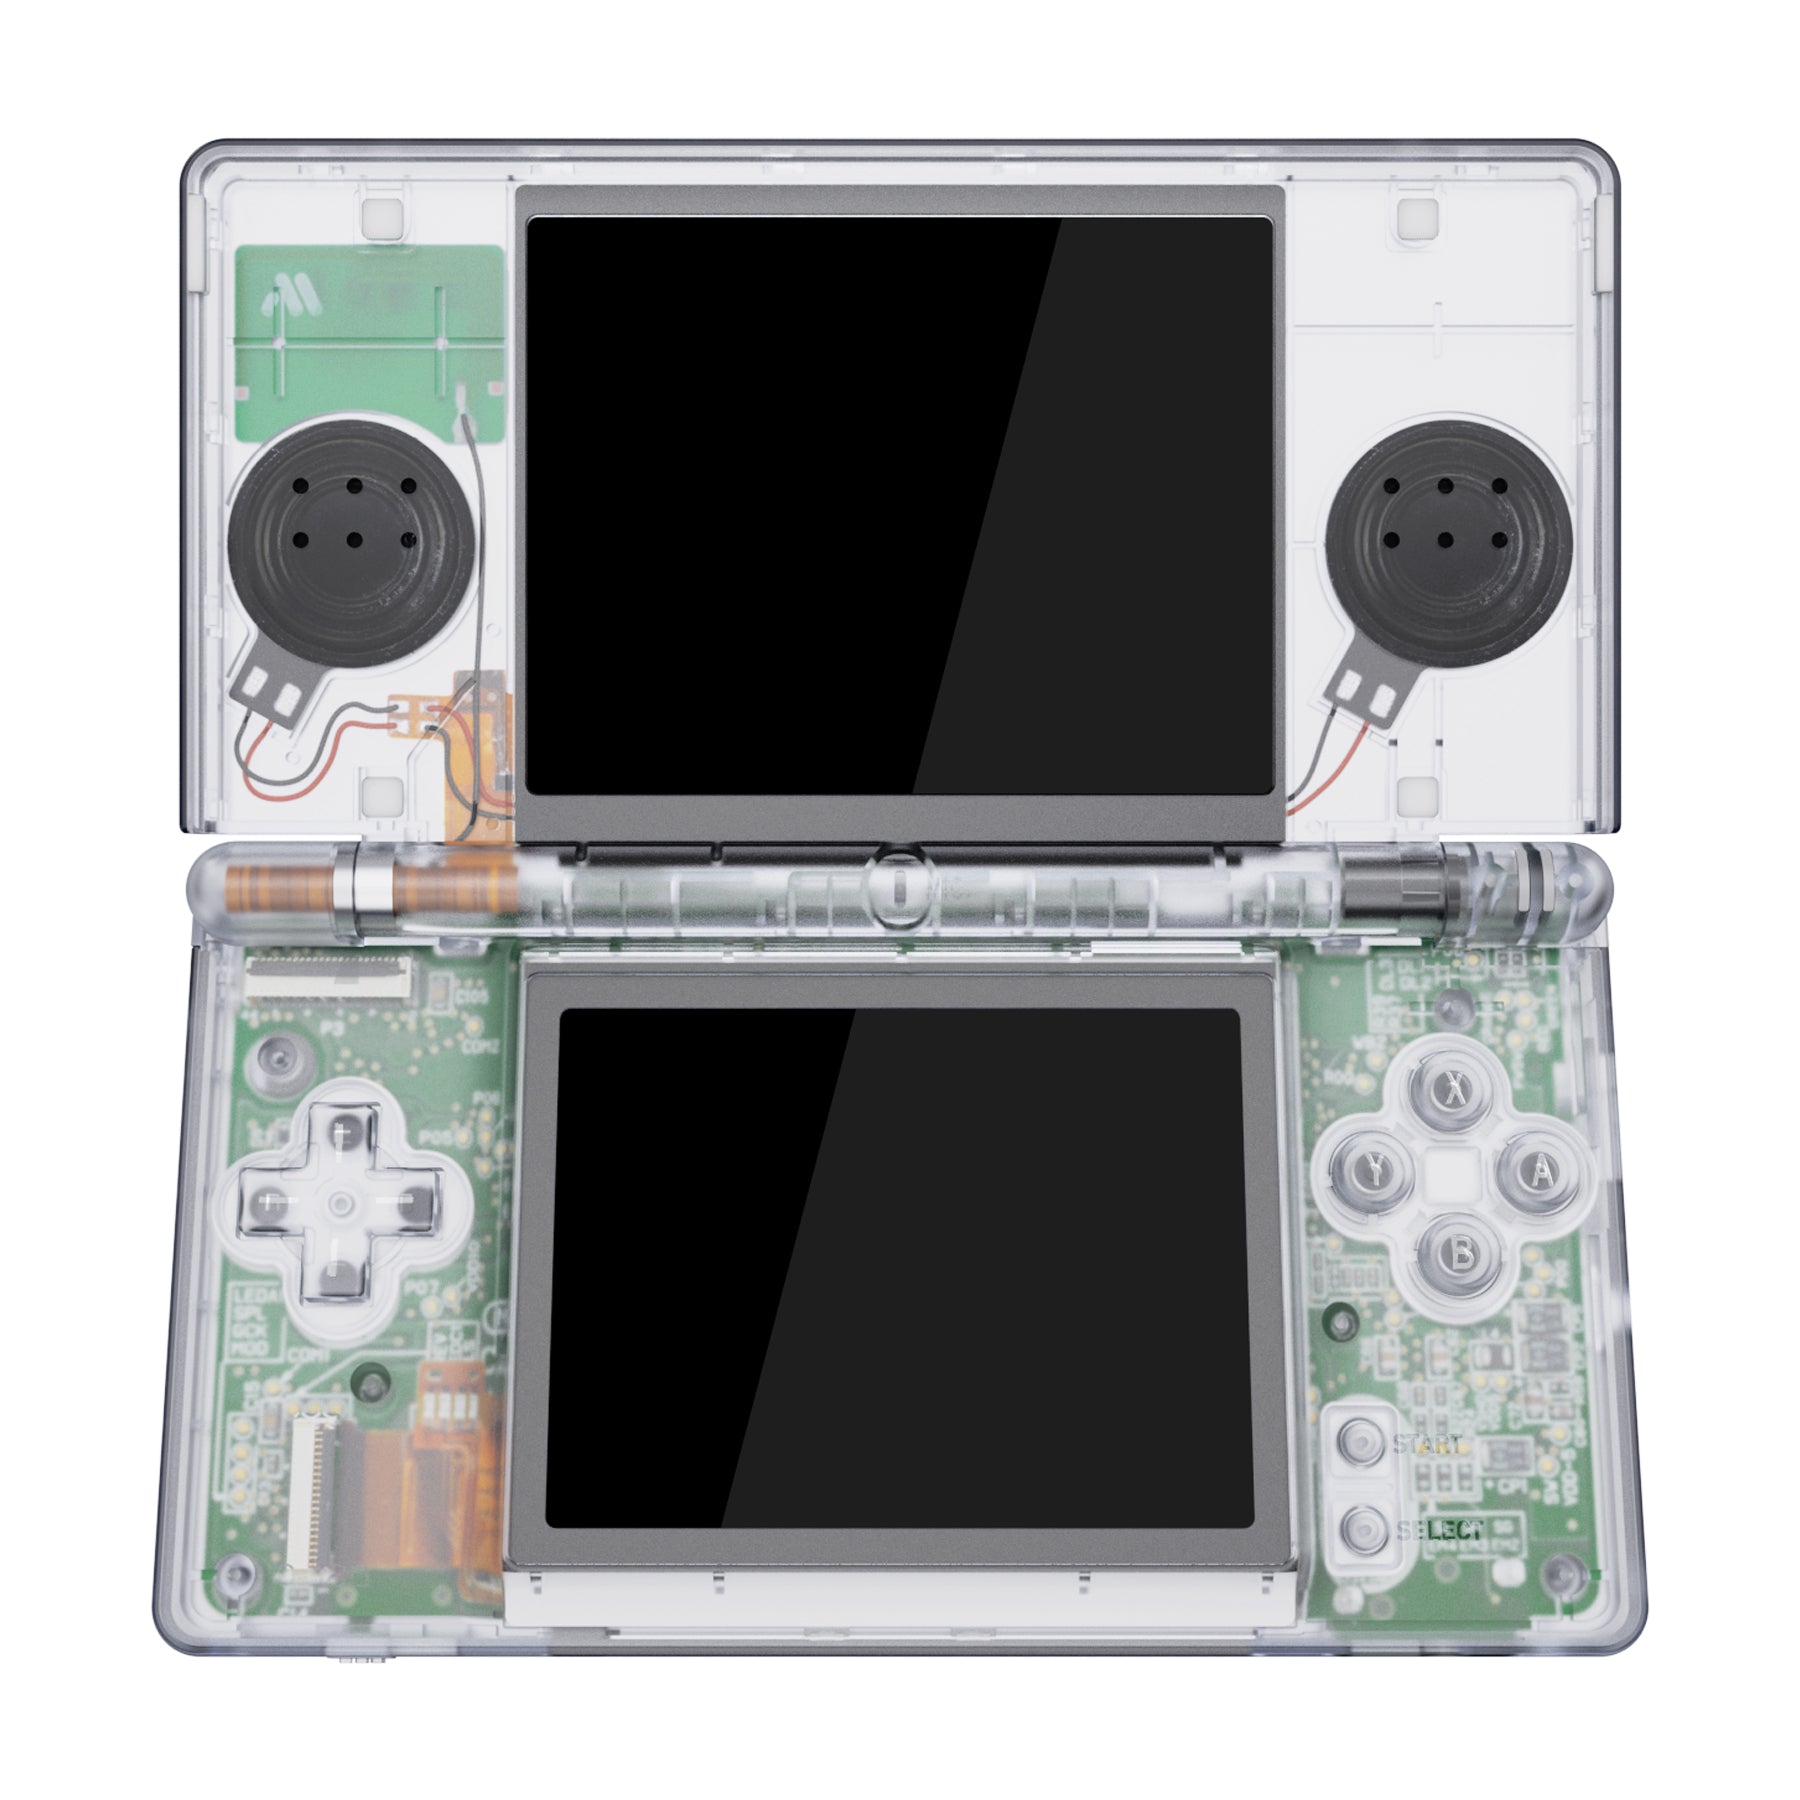 Nintendo DSi NDSI XL Housing Shell cover buttons screws kit